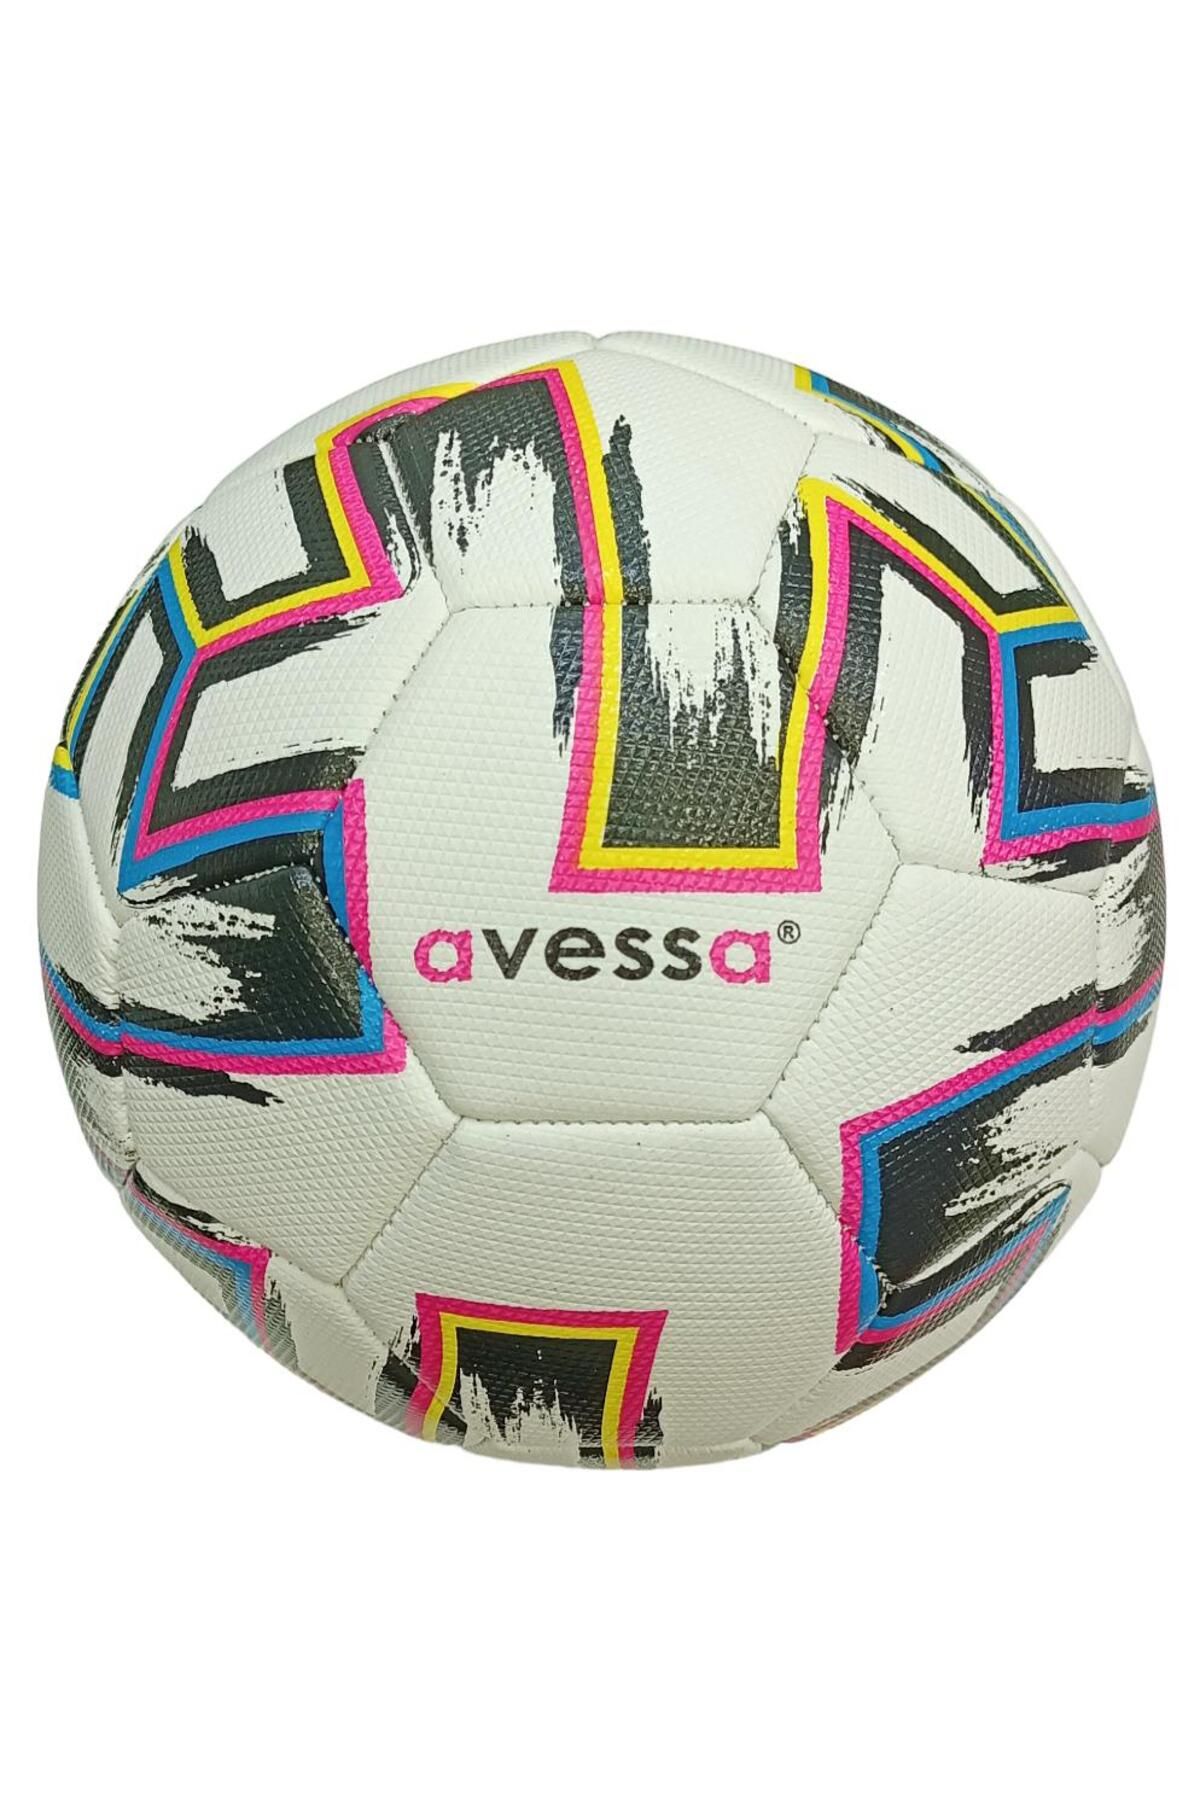 Avessa 4 Astar Futbol Topu Ft-300-100 Beyaz